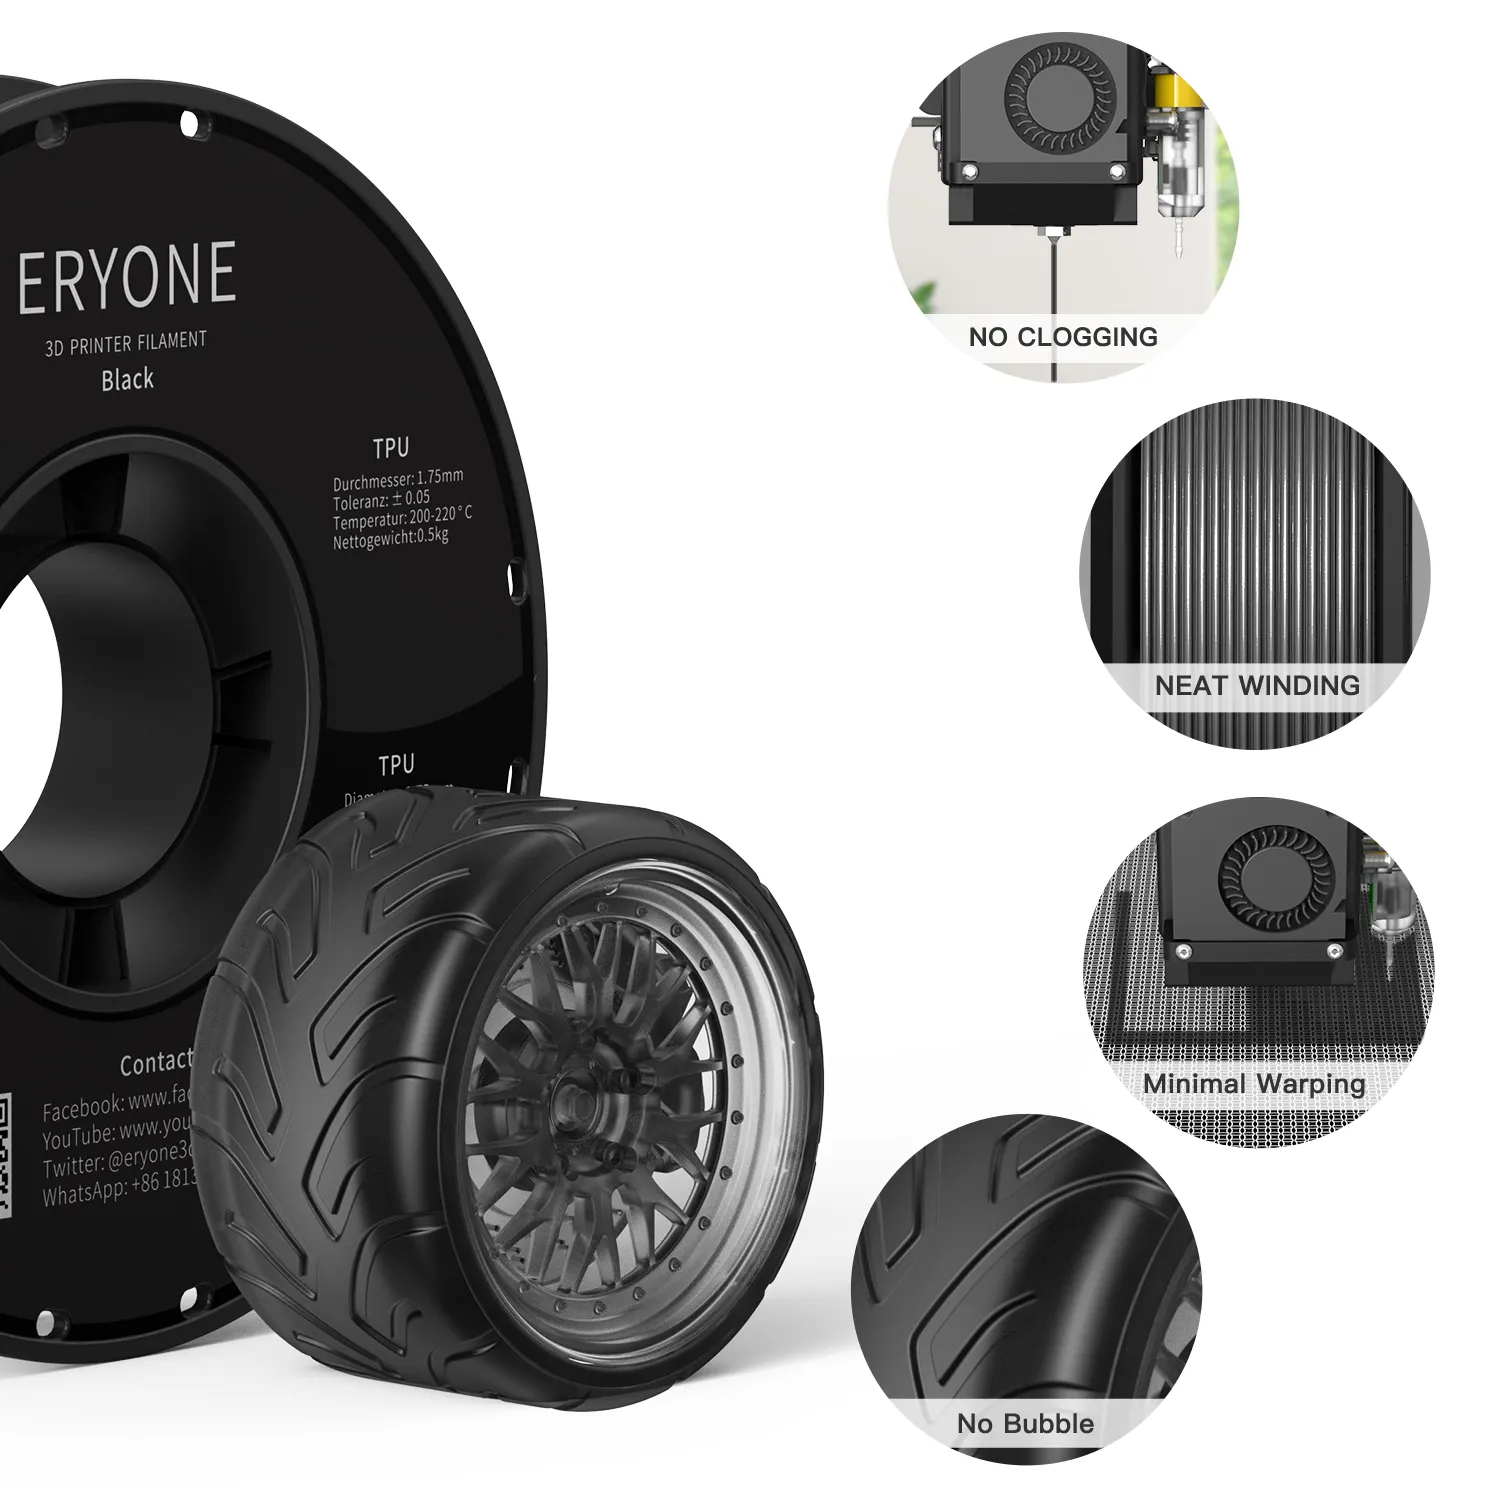 Eryone TPU Filament, Black TPU Filament 1.75mm, Filament for FDM 3D Printer 0.5kg/ Spool